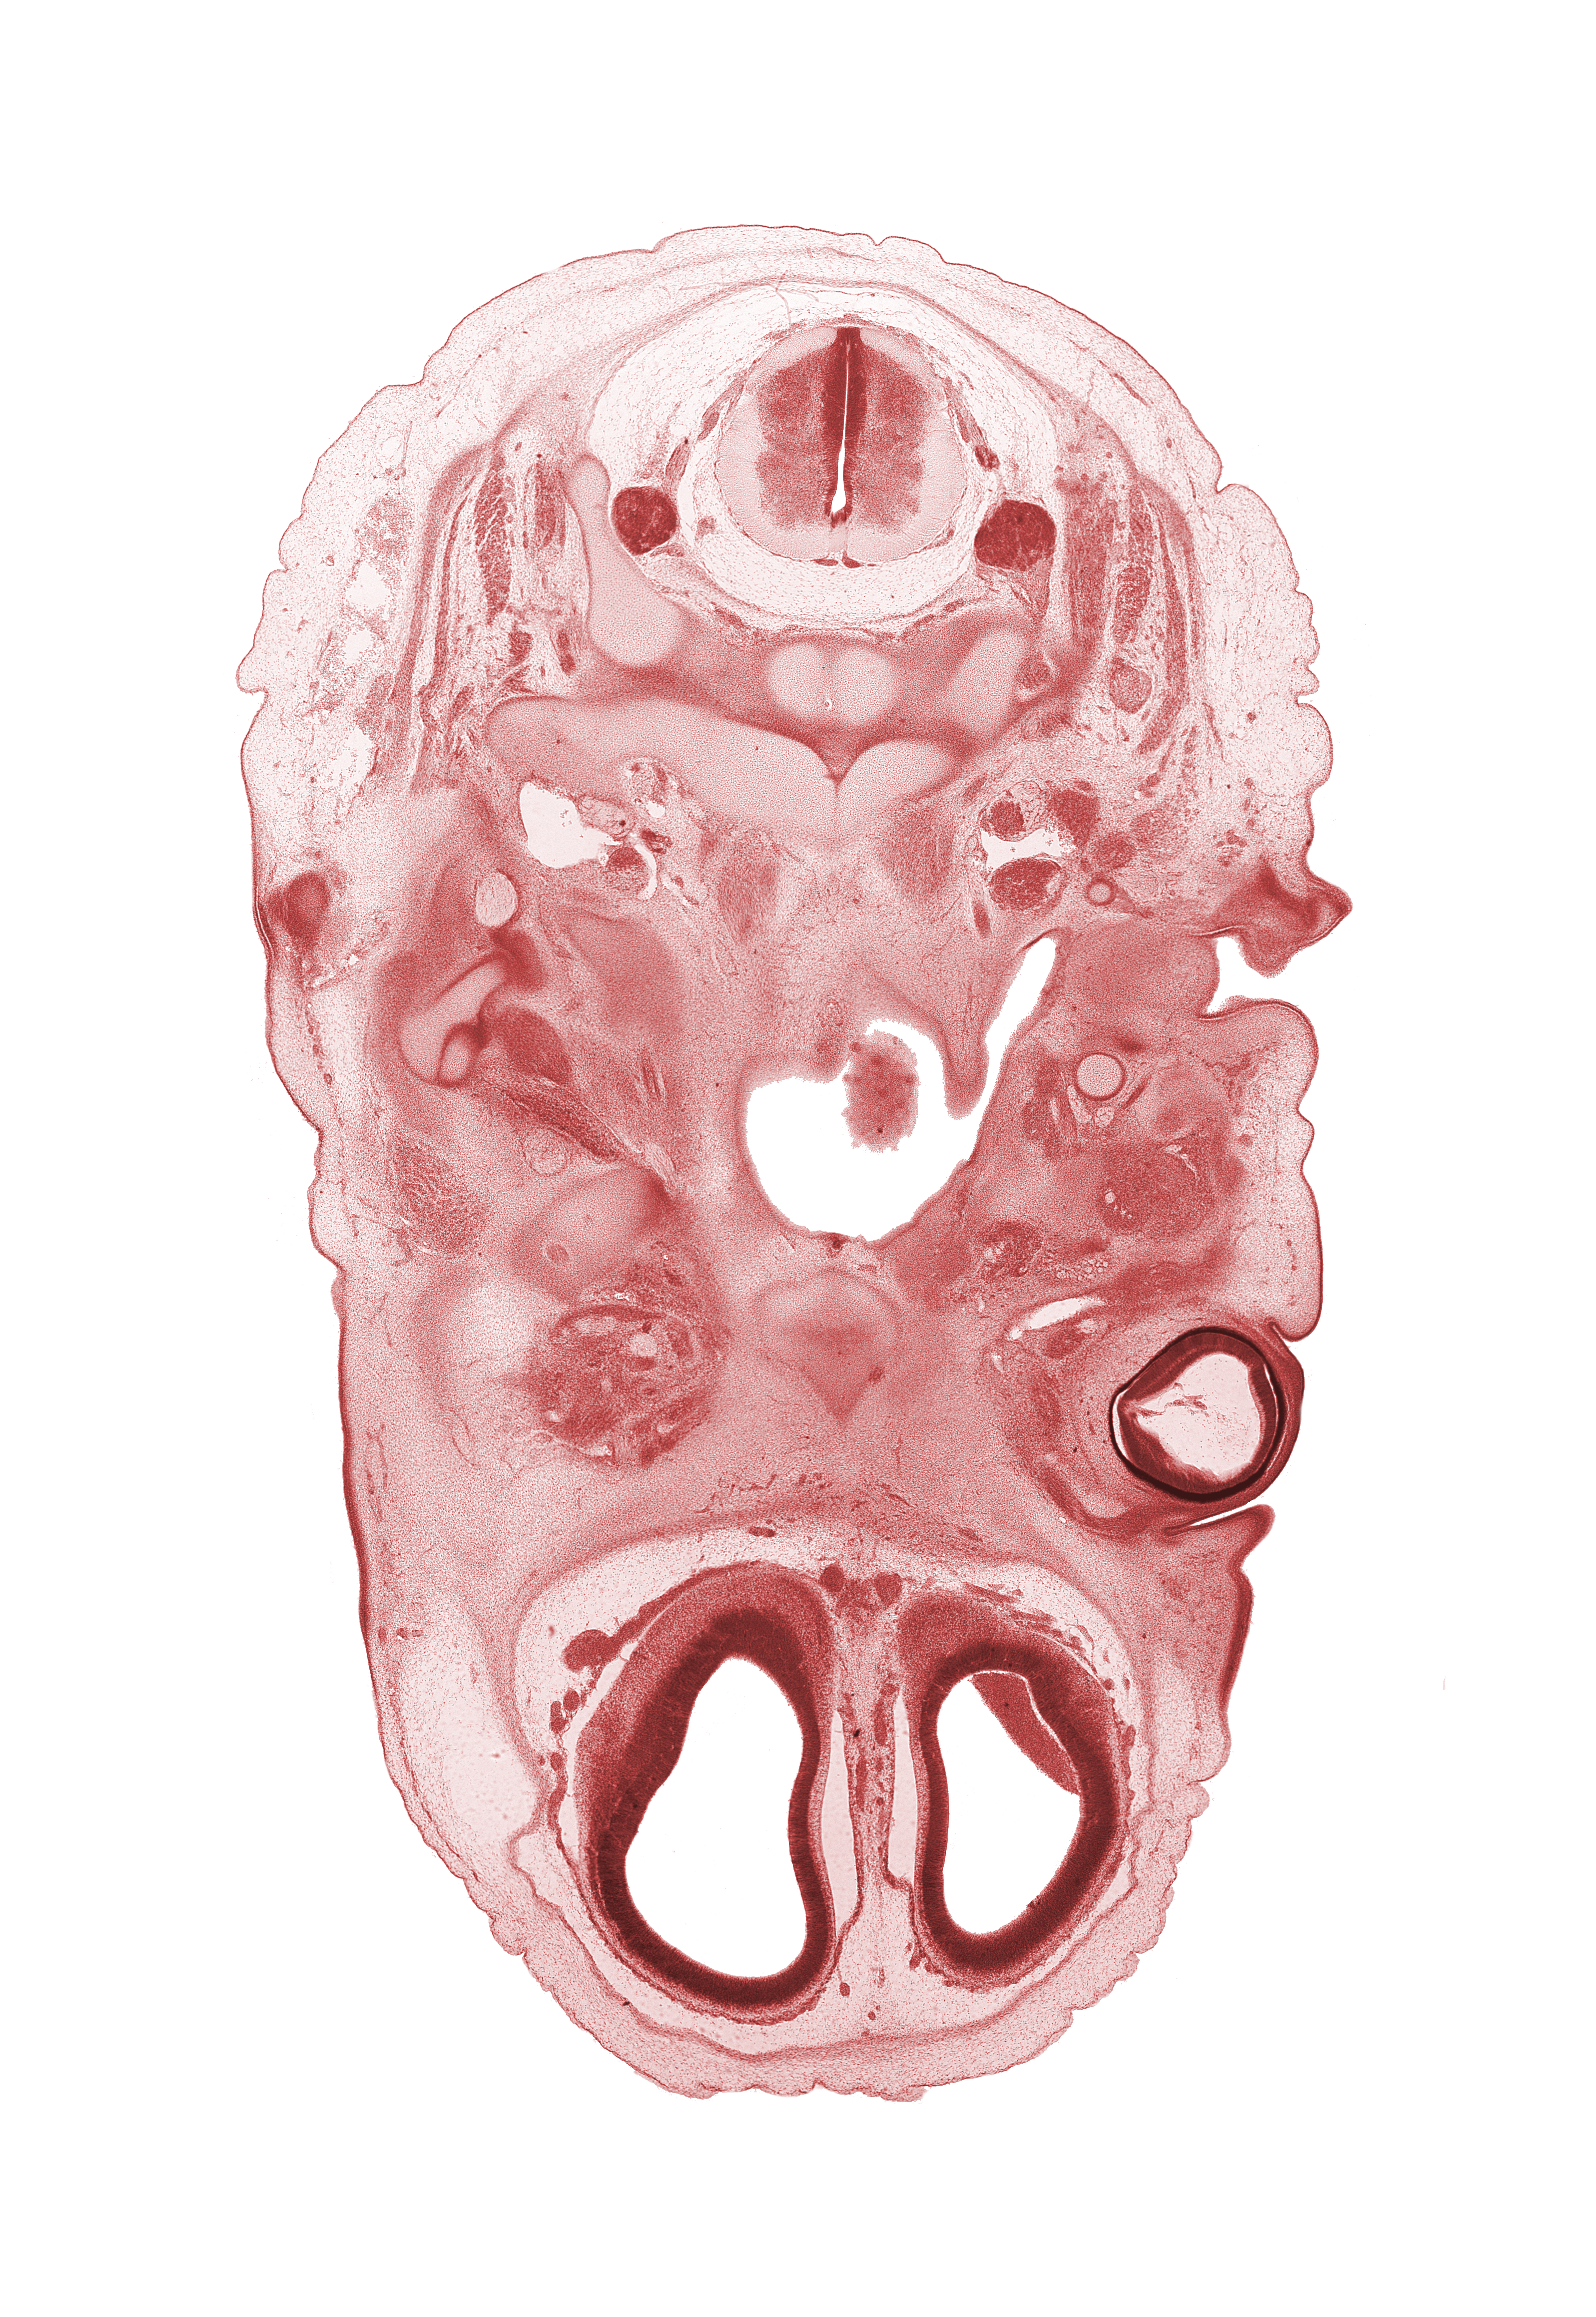 C-2 spinal ganglion, anterior communicating artery, artifact separation(s), basisphenoid, blastema of extra-ocular muscle(s), cerebral vesicle (telencephalon), cornea, dens of C-2 vertebra (axis), edge of tongue, external acoustic meatus, hypoglossal nerve (CN XII), internal carotid artery, internal jugular vein, intraretinal space (optic vesicle cavity), malleus cartilage, nasopharynx, olfactory bulb, optic cup cavity, pharyngotympanic tube, spinal accessory nerve (CN XI), subarachnoid space, vagus nerve (CN X), vertebral artery